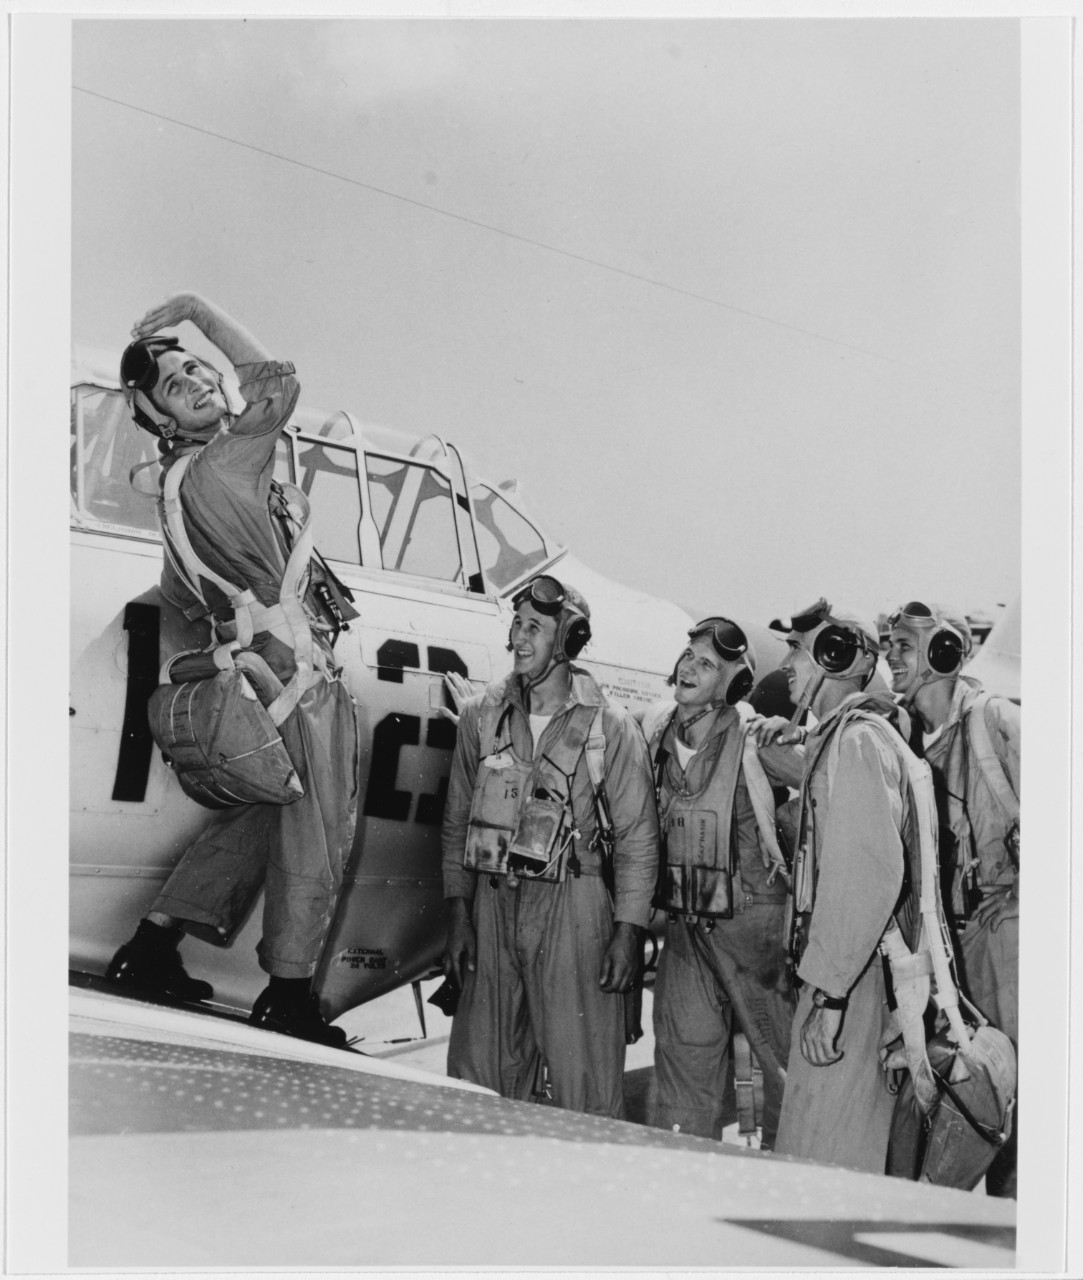 TOMMY LEE BURGESS, Midshipman, USNR. Circa December 1948